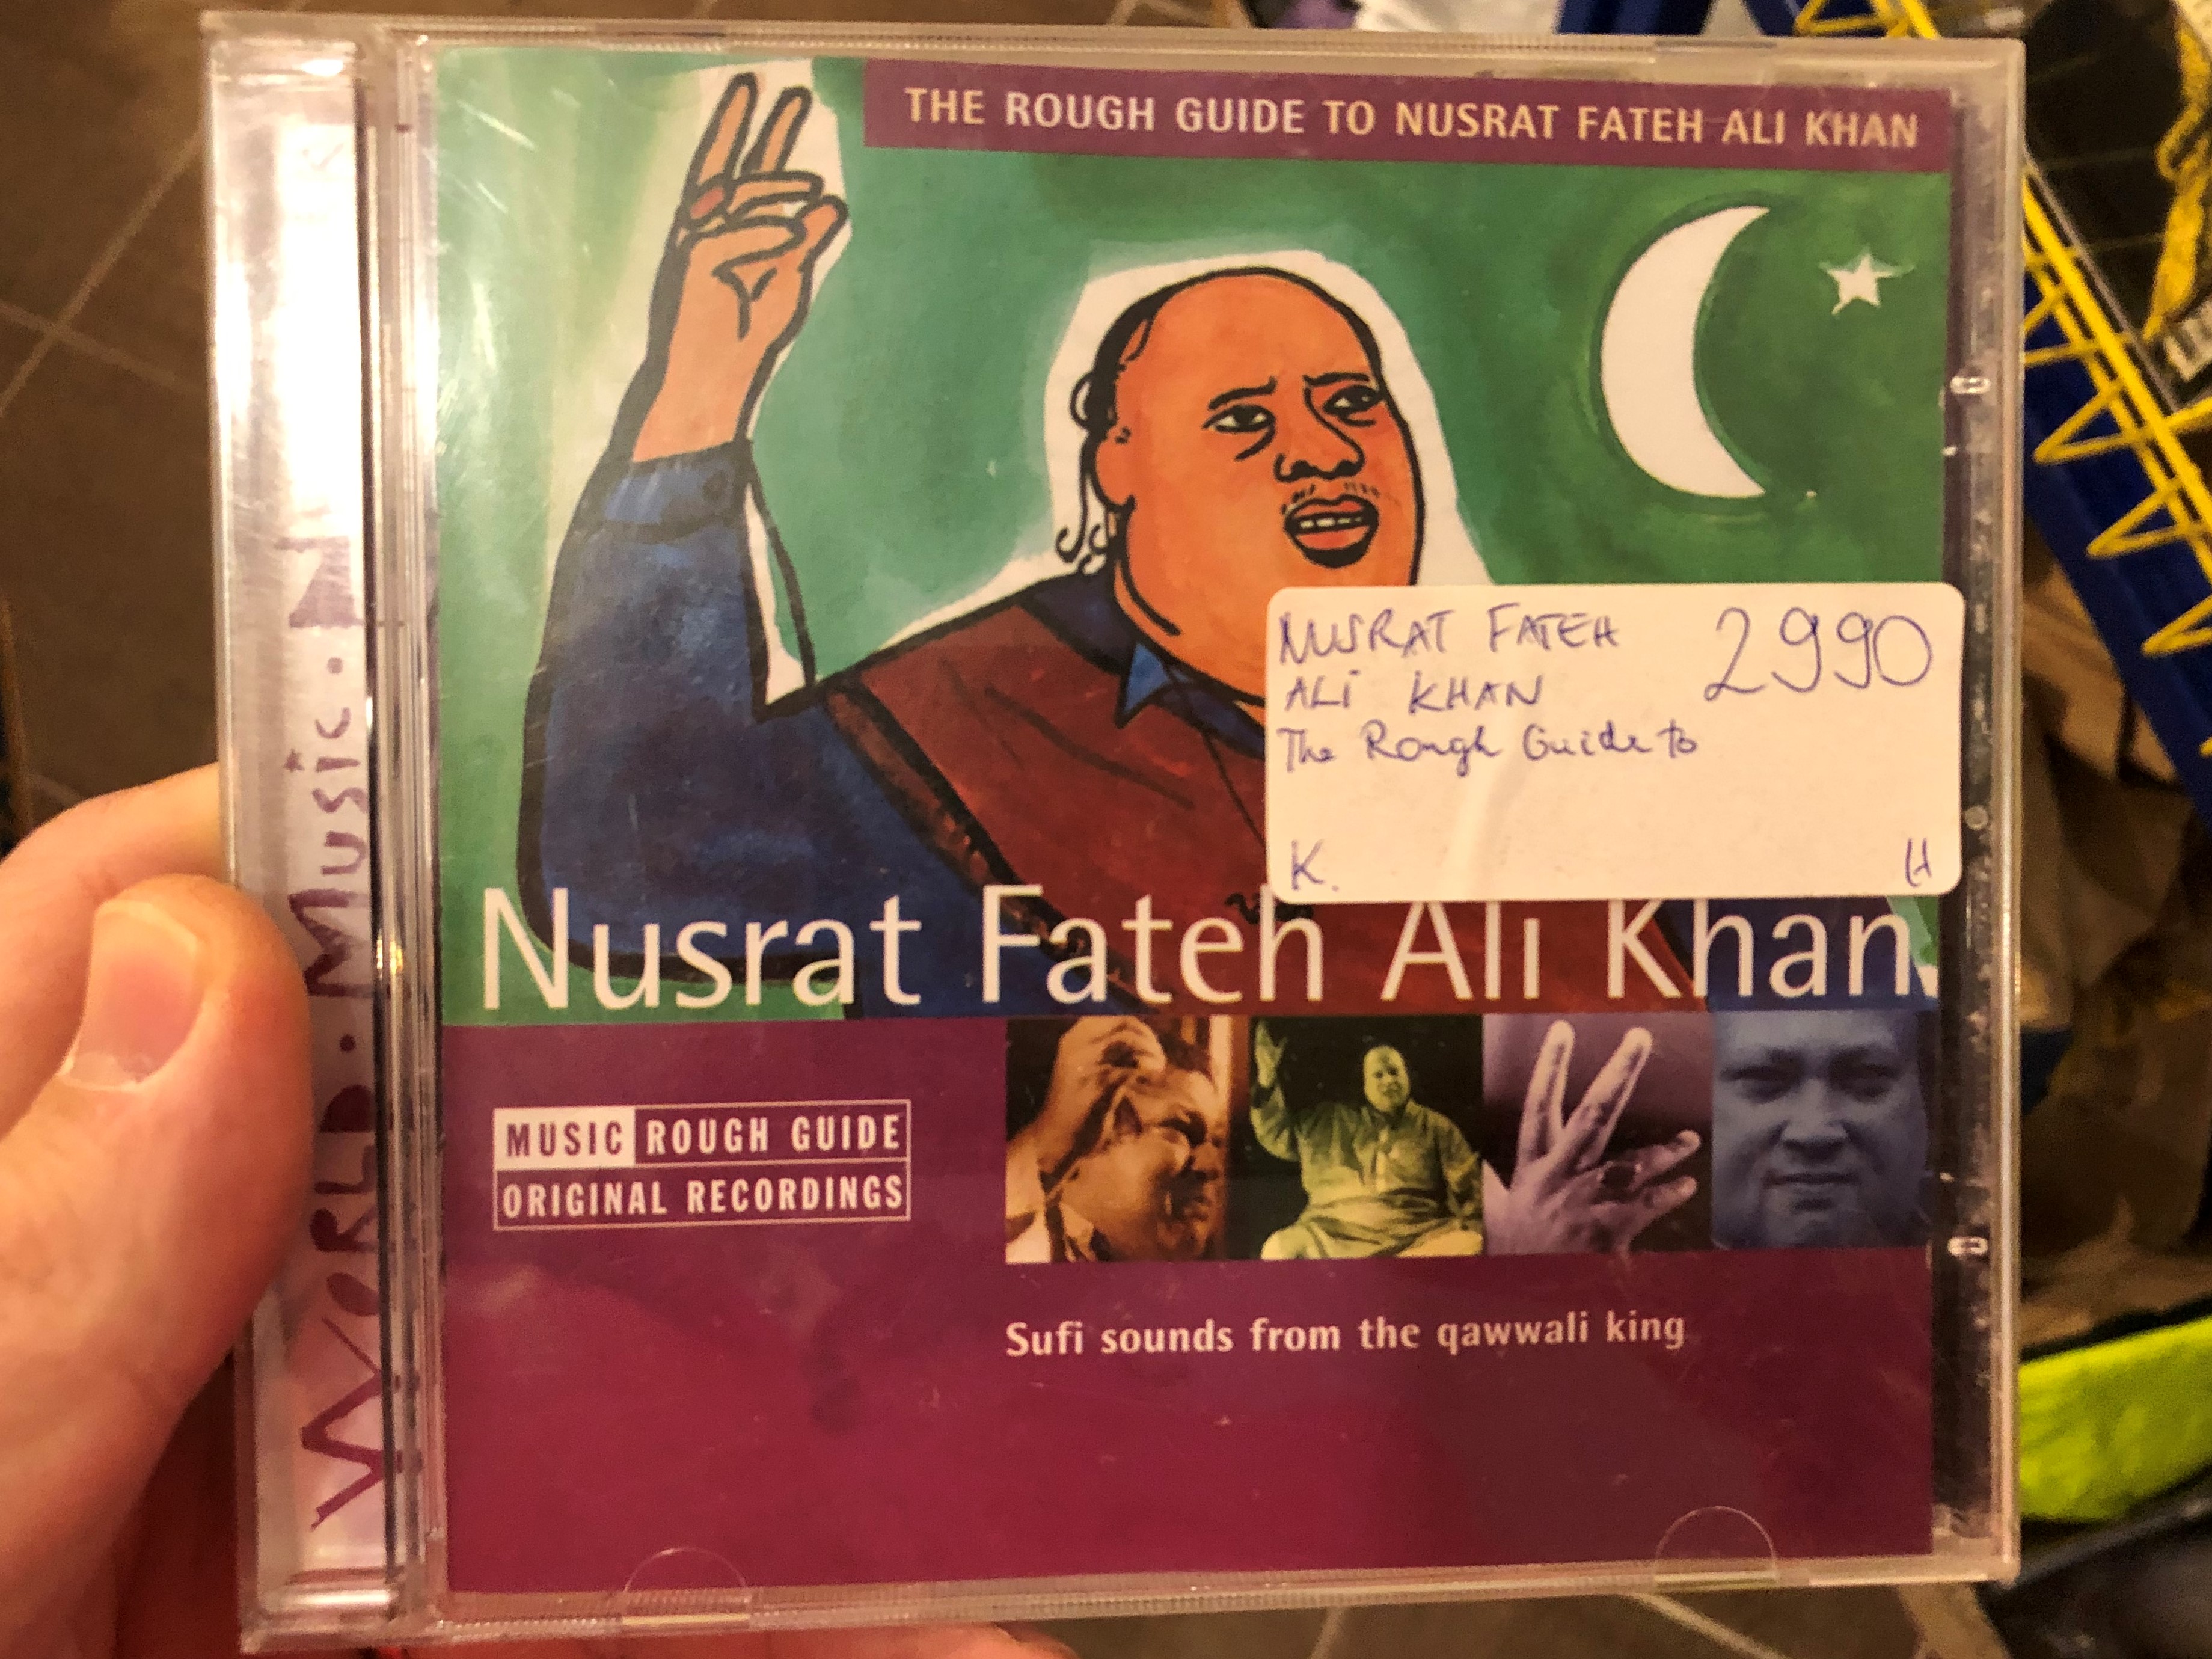 the-rough-guide-to-nusrat-fateh-ali-khan-nusrat-fateh-ali-khan-sufi-sounds-from-the-qawwali-king-world-music-network-audio-cd-2002-rgnet-1078-cd-1-.jpg